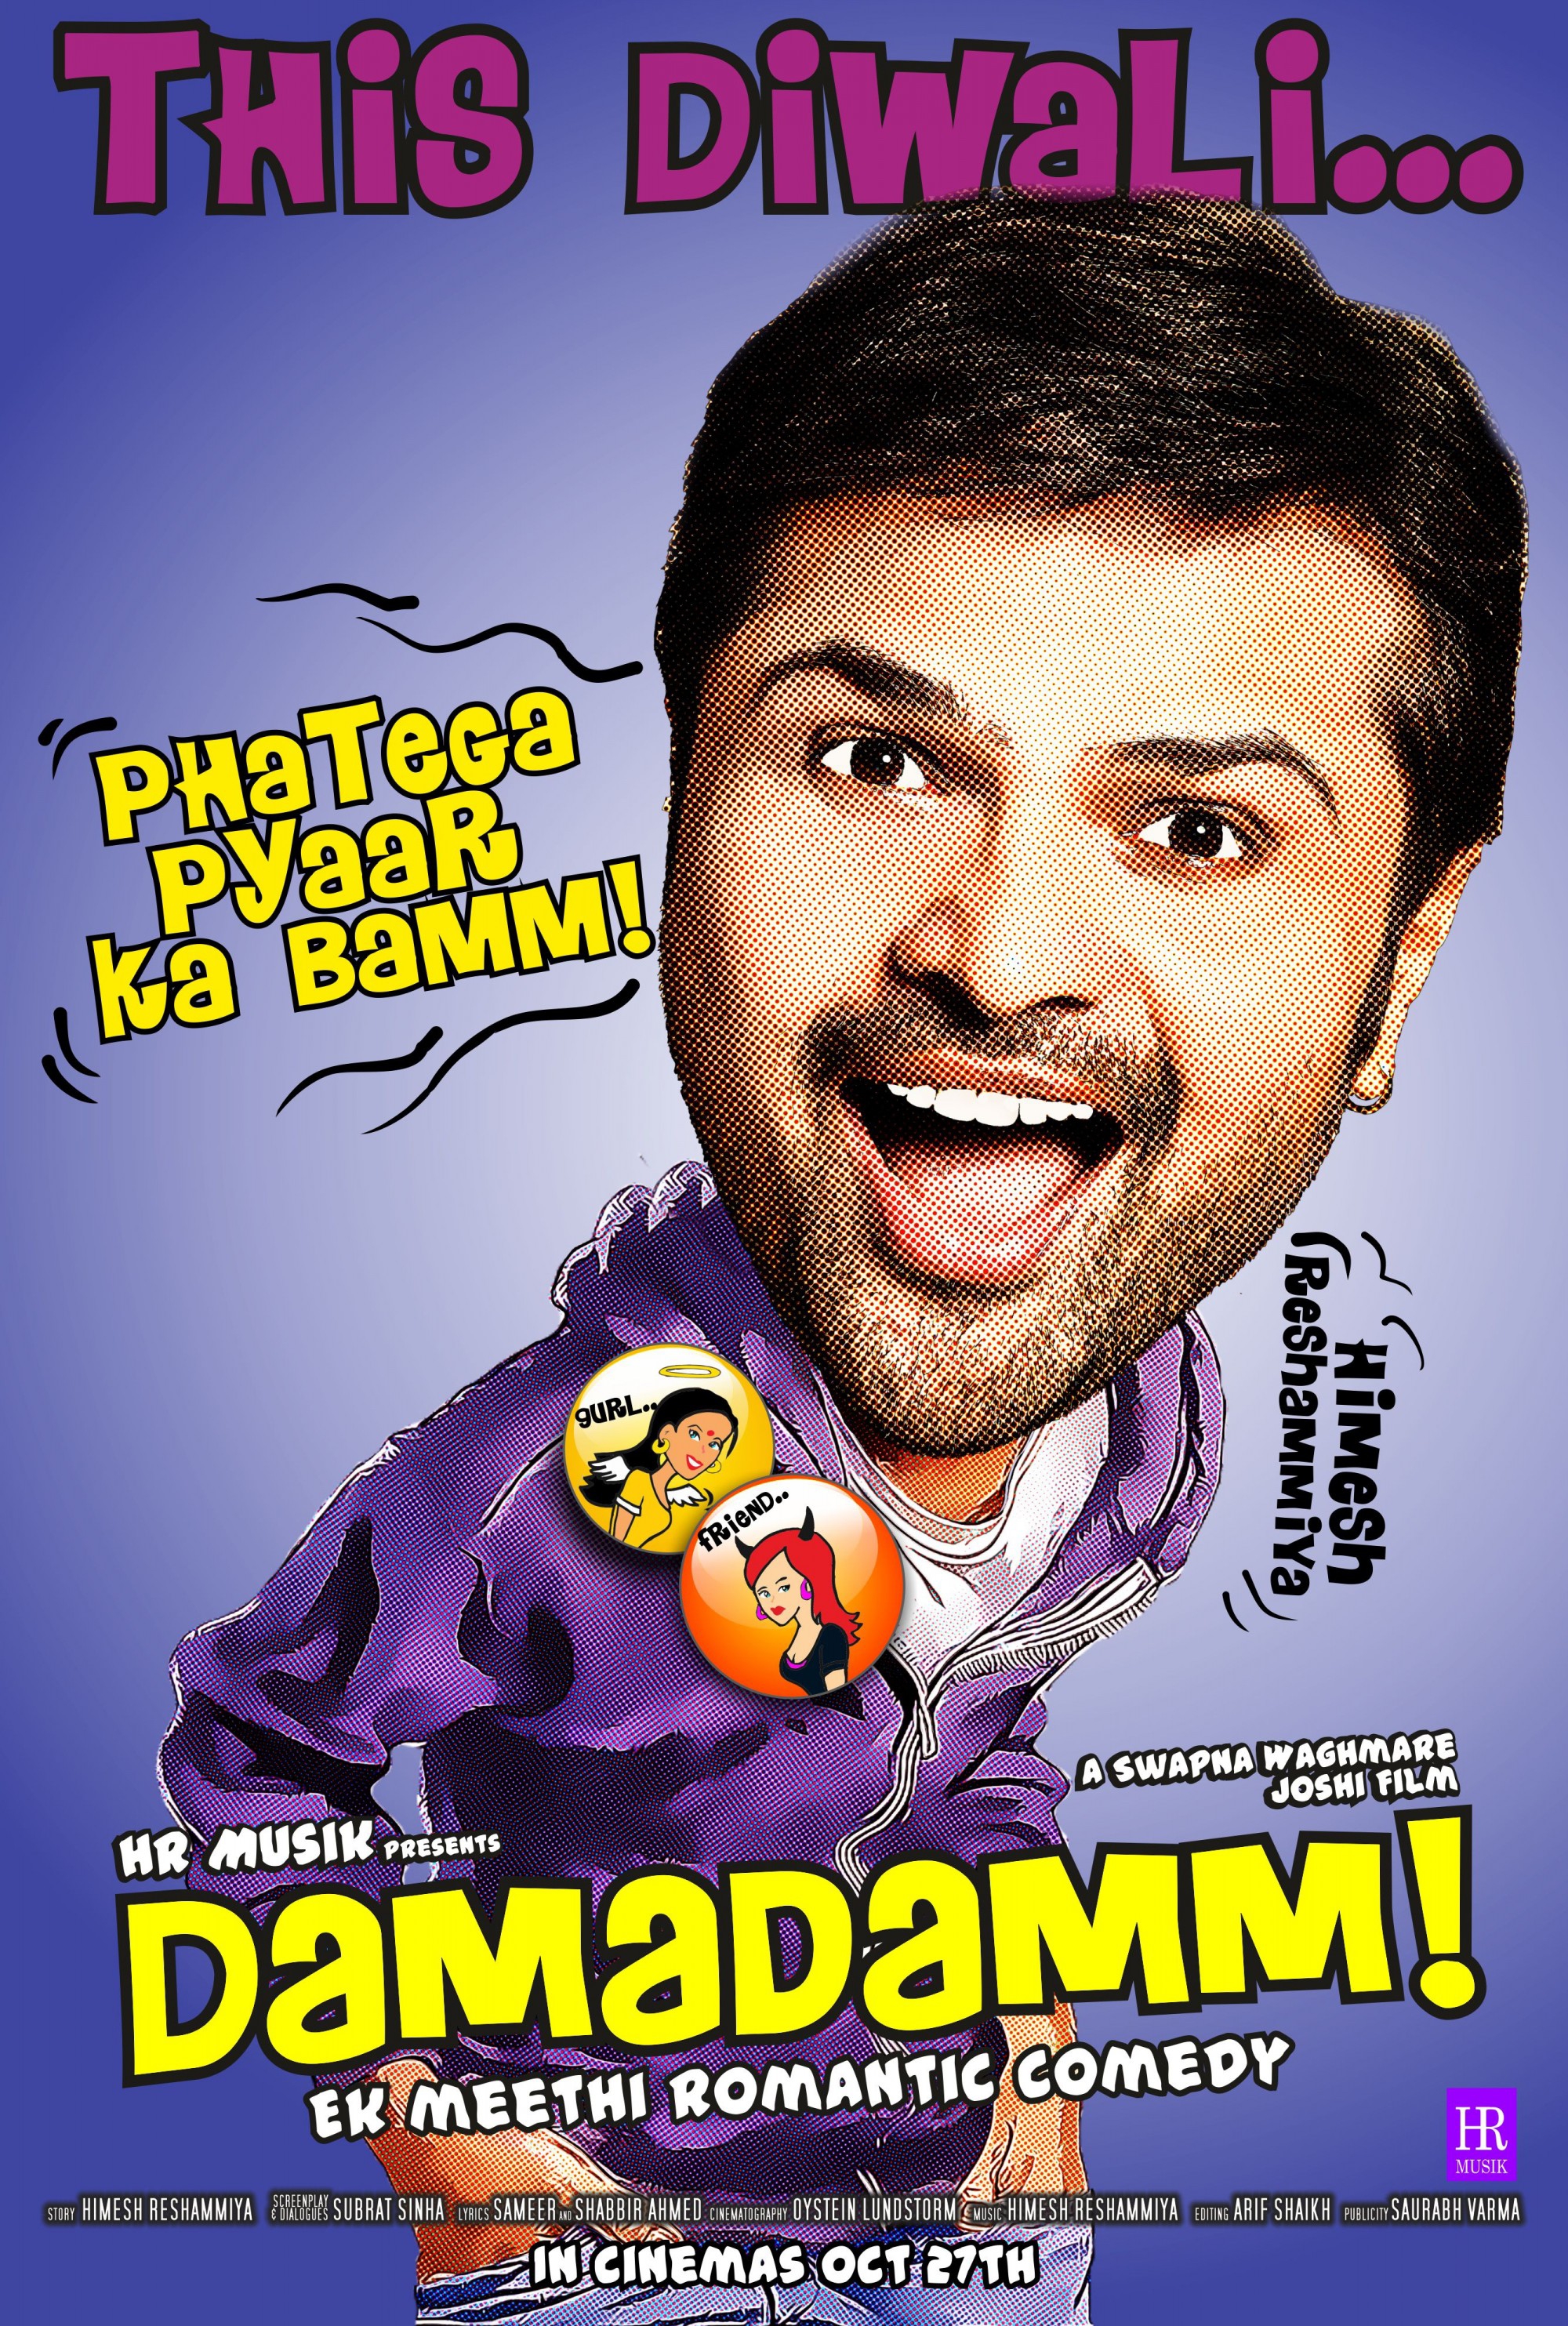 Himesh Reshammiya Video Rajwap - Damadamm! Movie: Review | Release Date (2011) | Songs | Music | Images |  Official Trailers | Videos | Photos | News - Bollywood Hungama